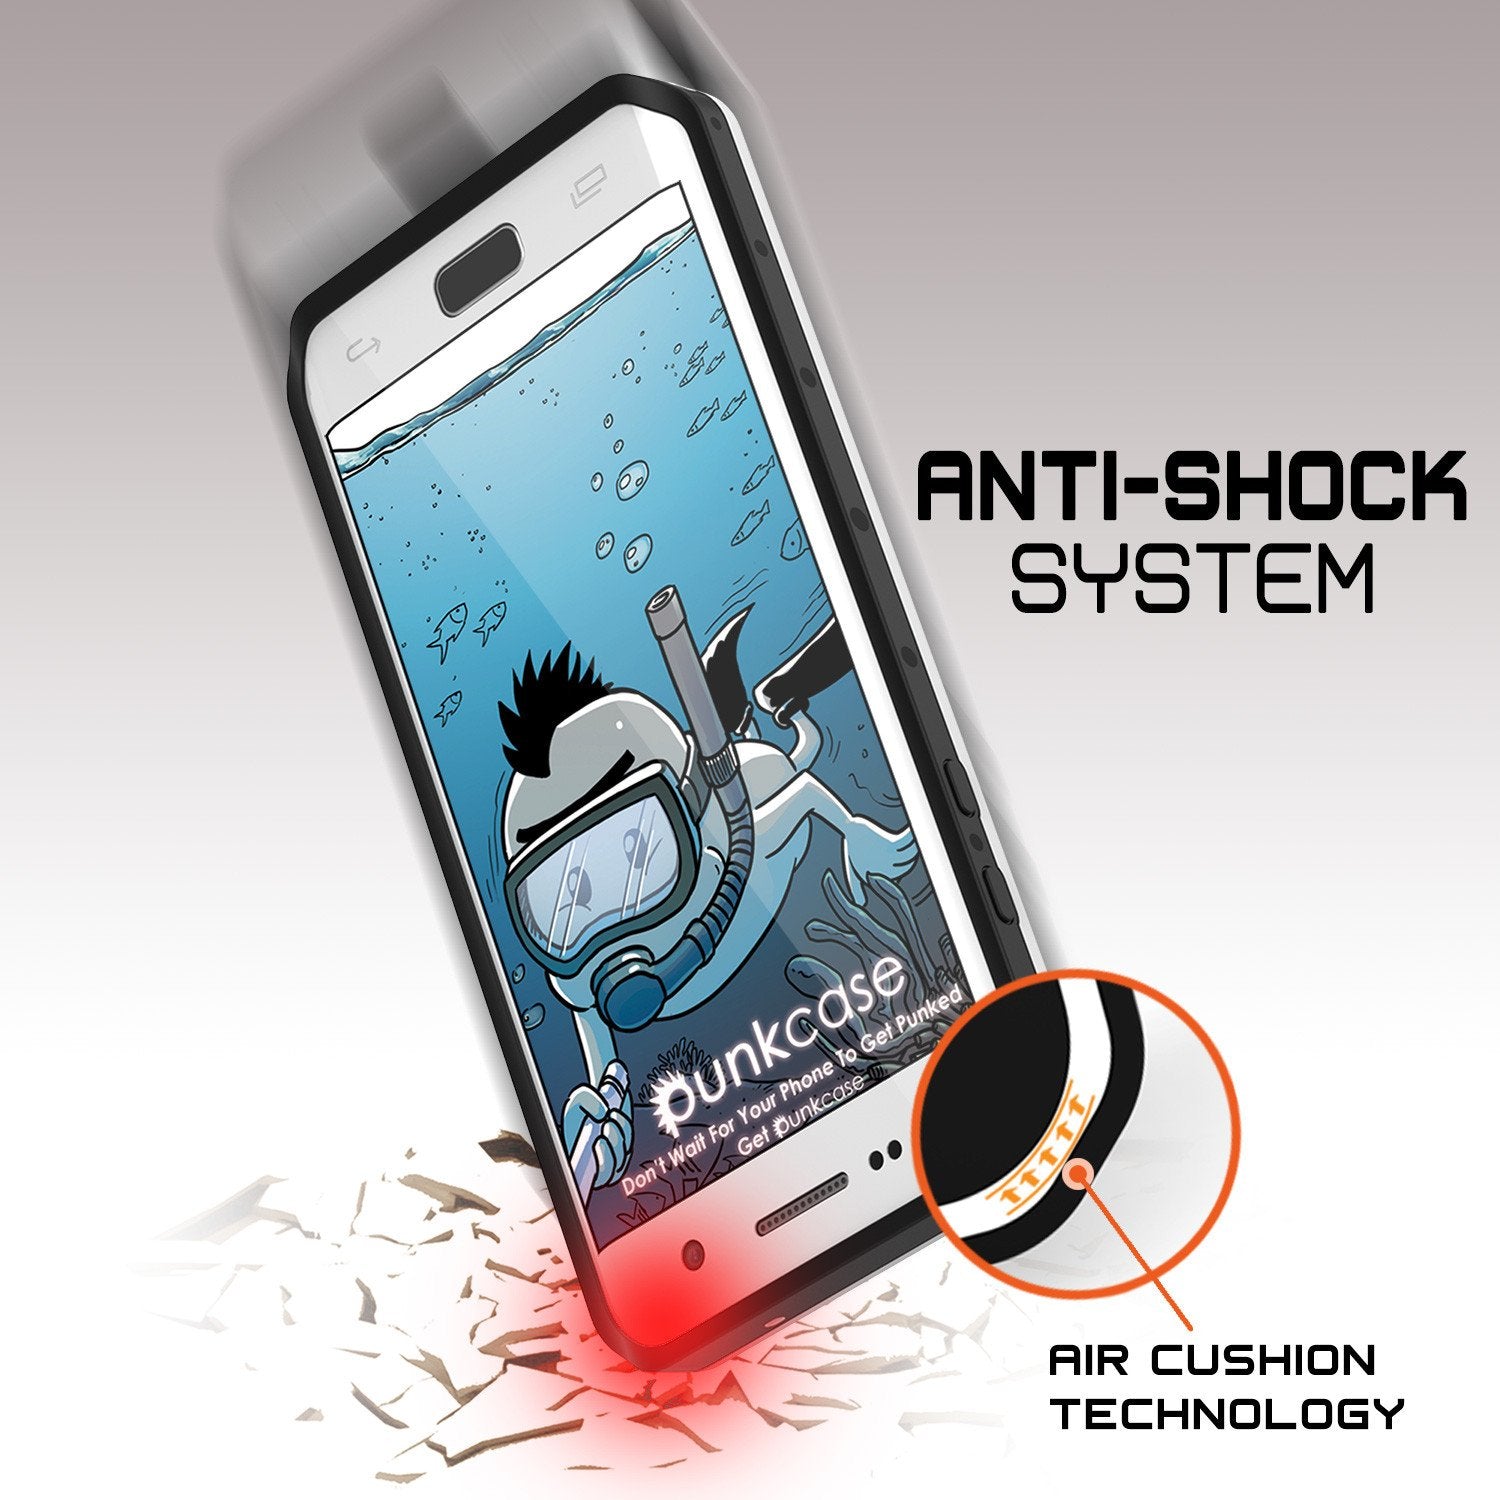 Galaxy S7 EDGE Waterproof Case, Punkcase StudStar White Thin 6.6ft Underwater IP68 Shock/Snow Proof